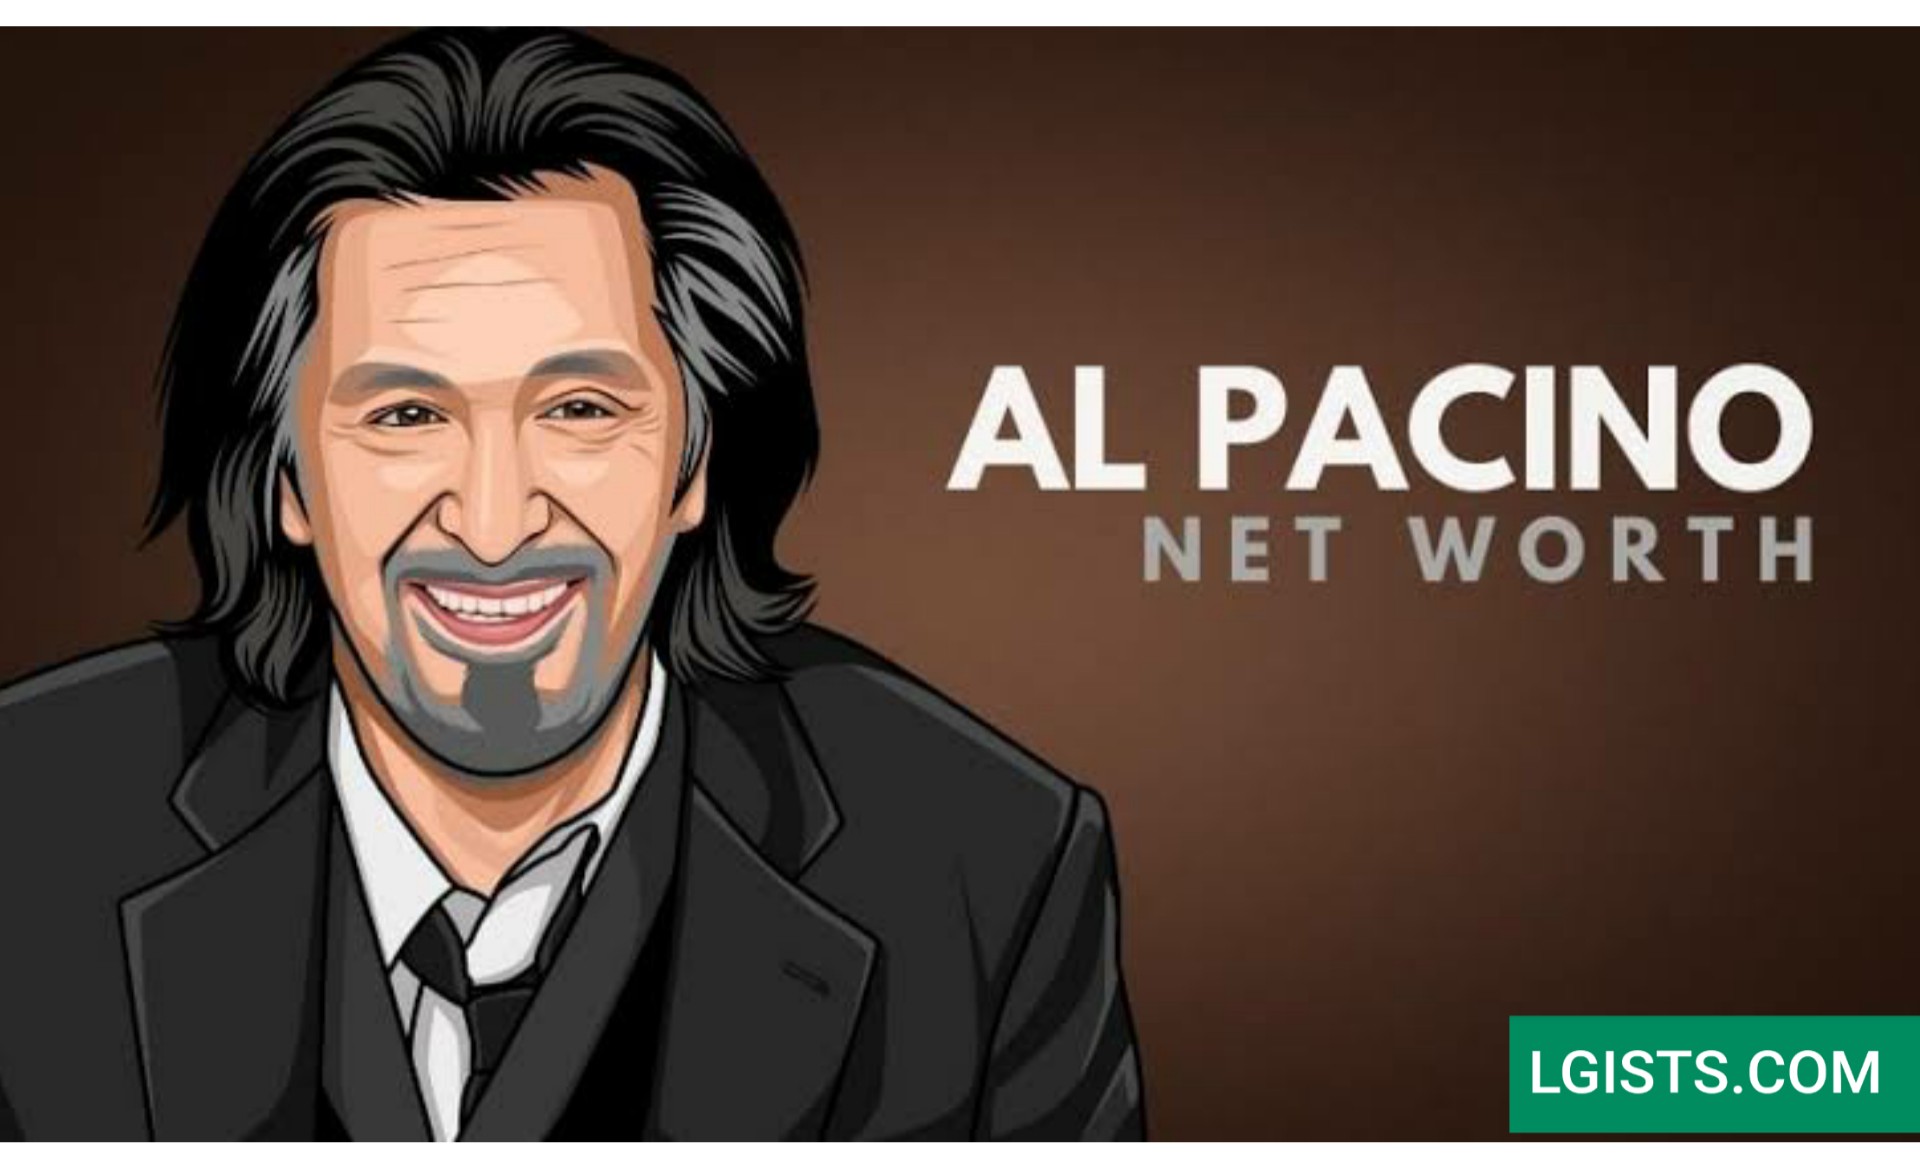 Al Pacino Biography